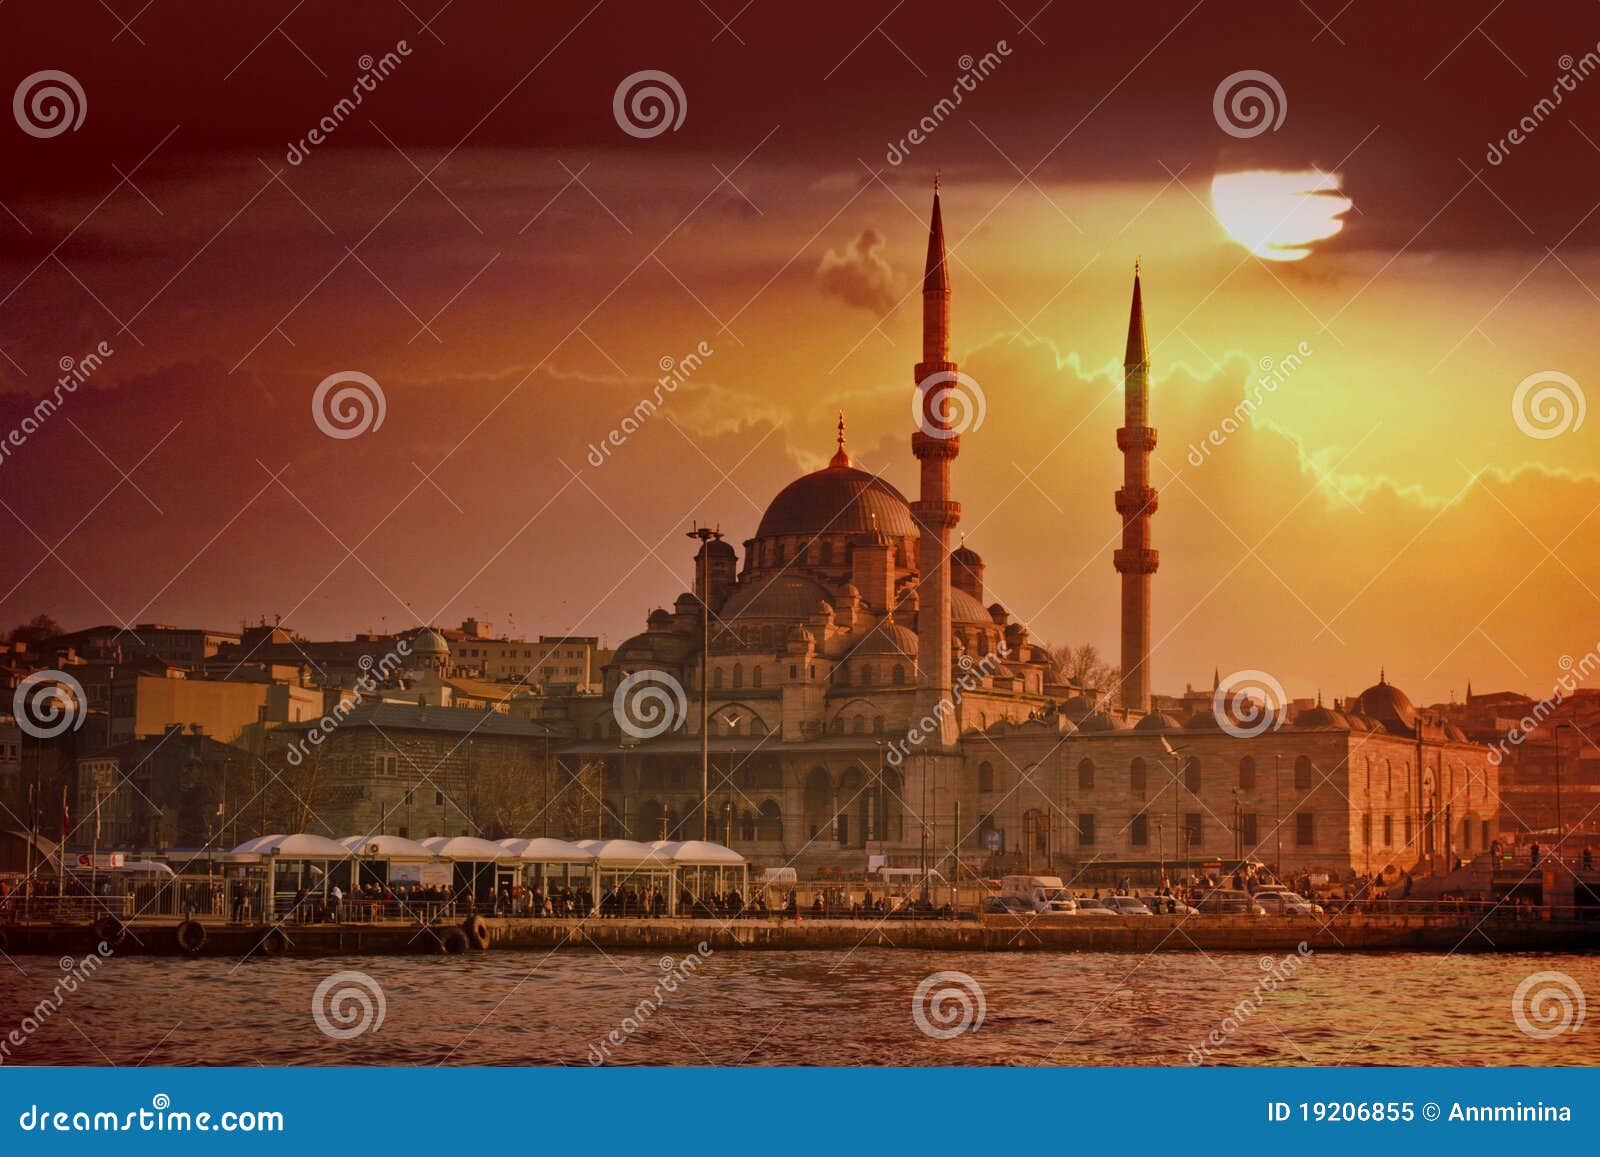 istanbul sunset